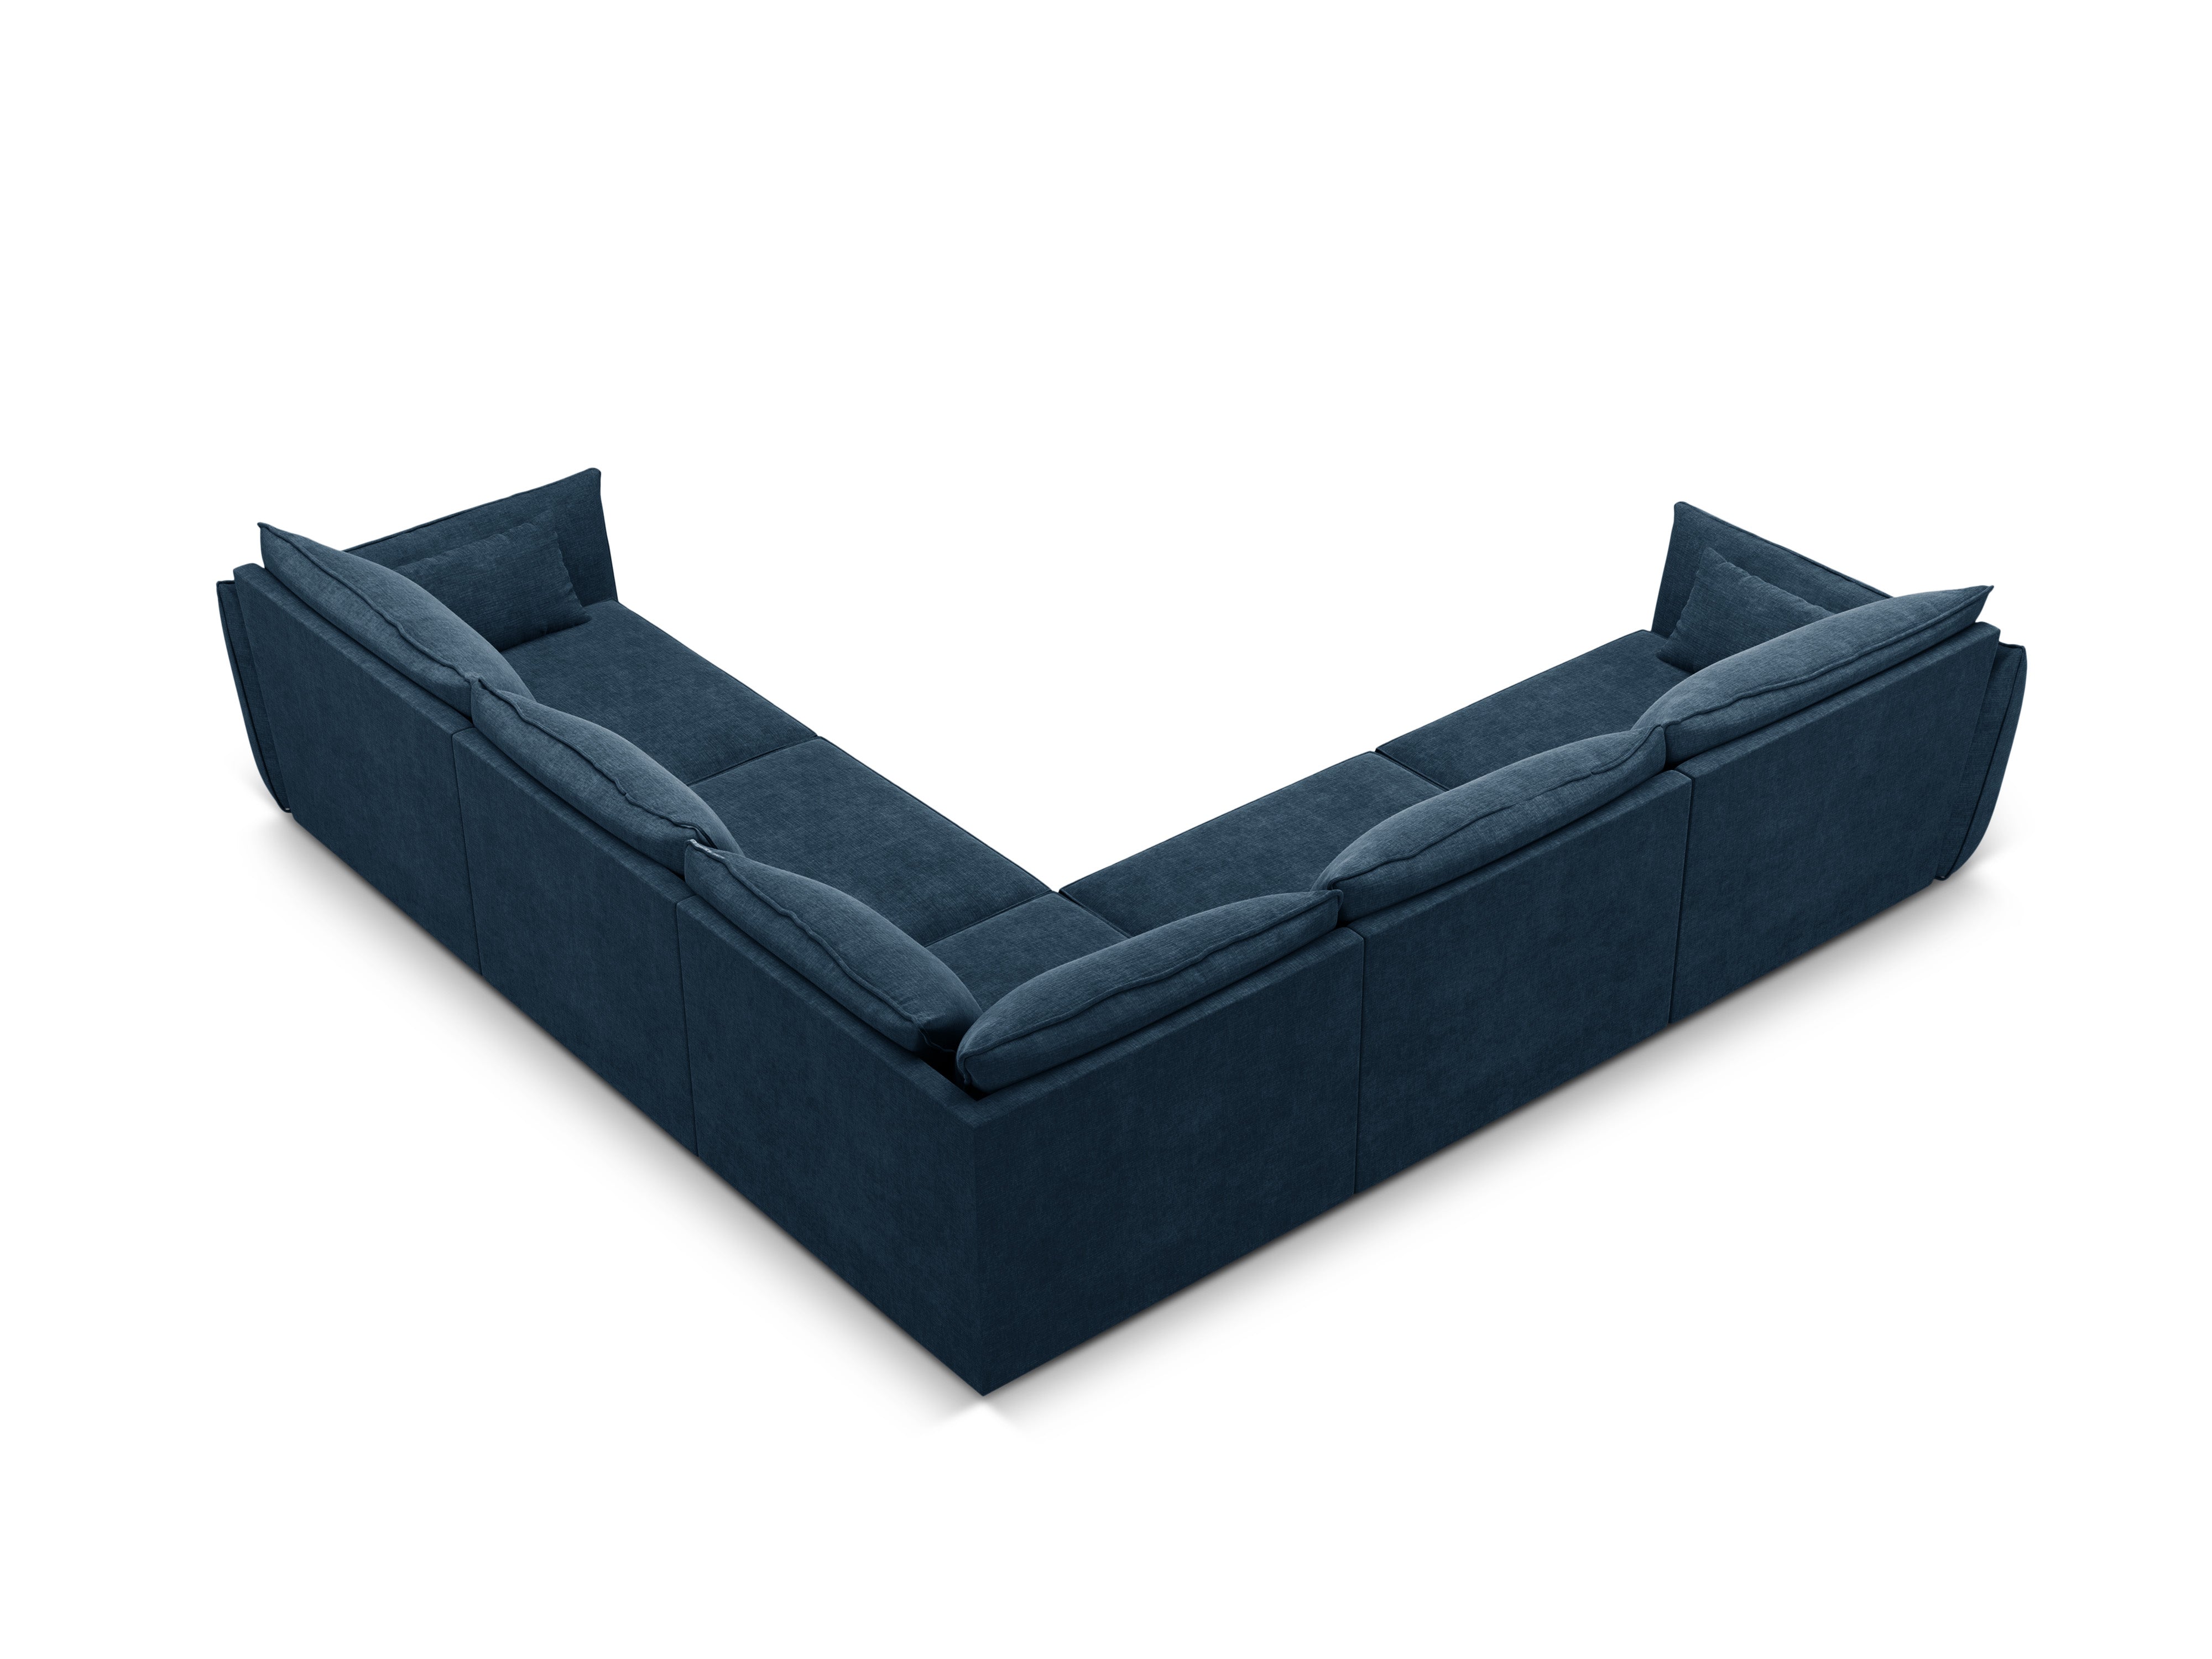 Symmetrical Corner Sofa, "Vanda", 7 Seats, 286x286x85
Made in Europe, Mazzini Sofas, Eye on Design